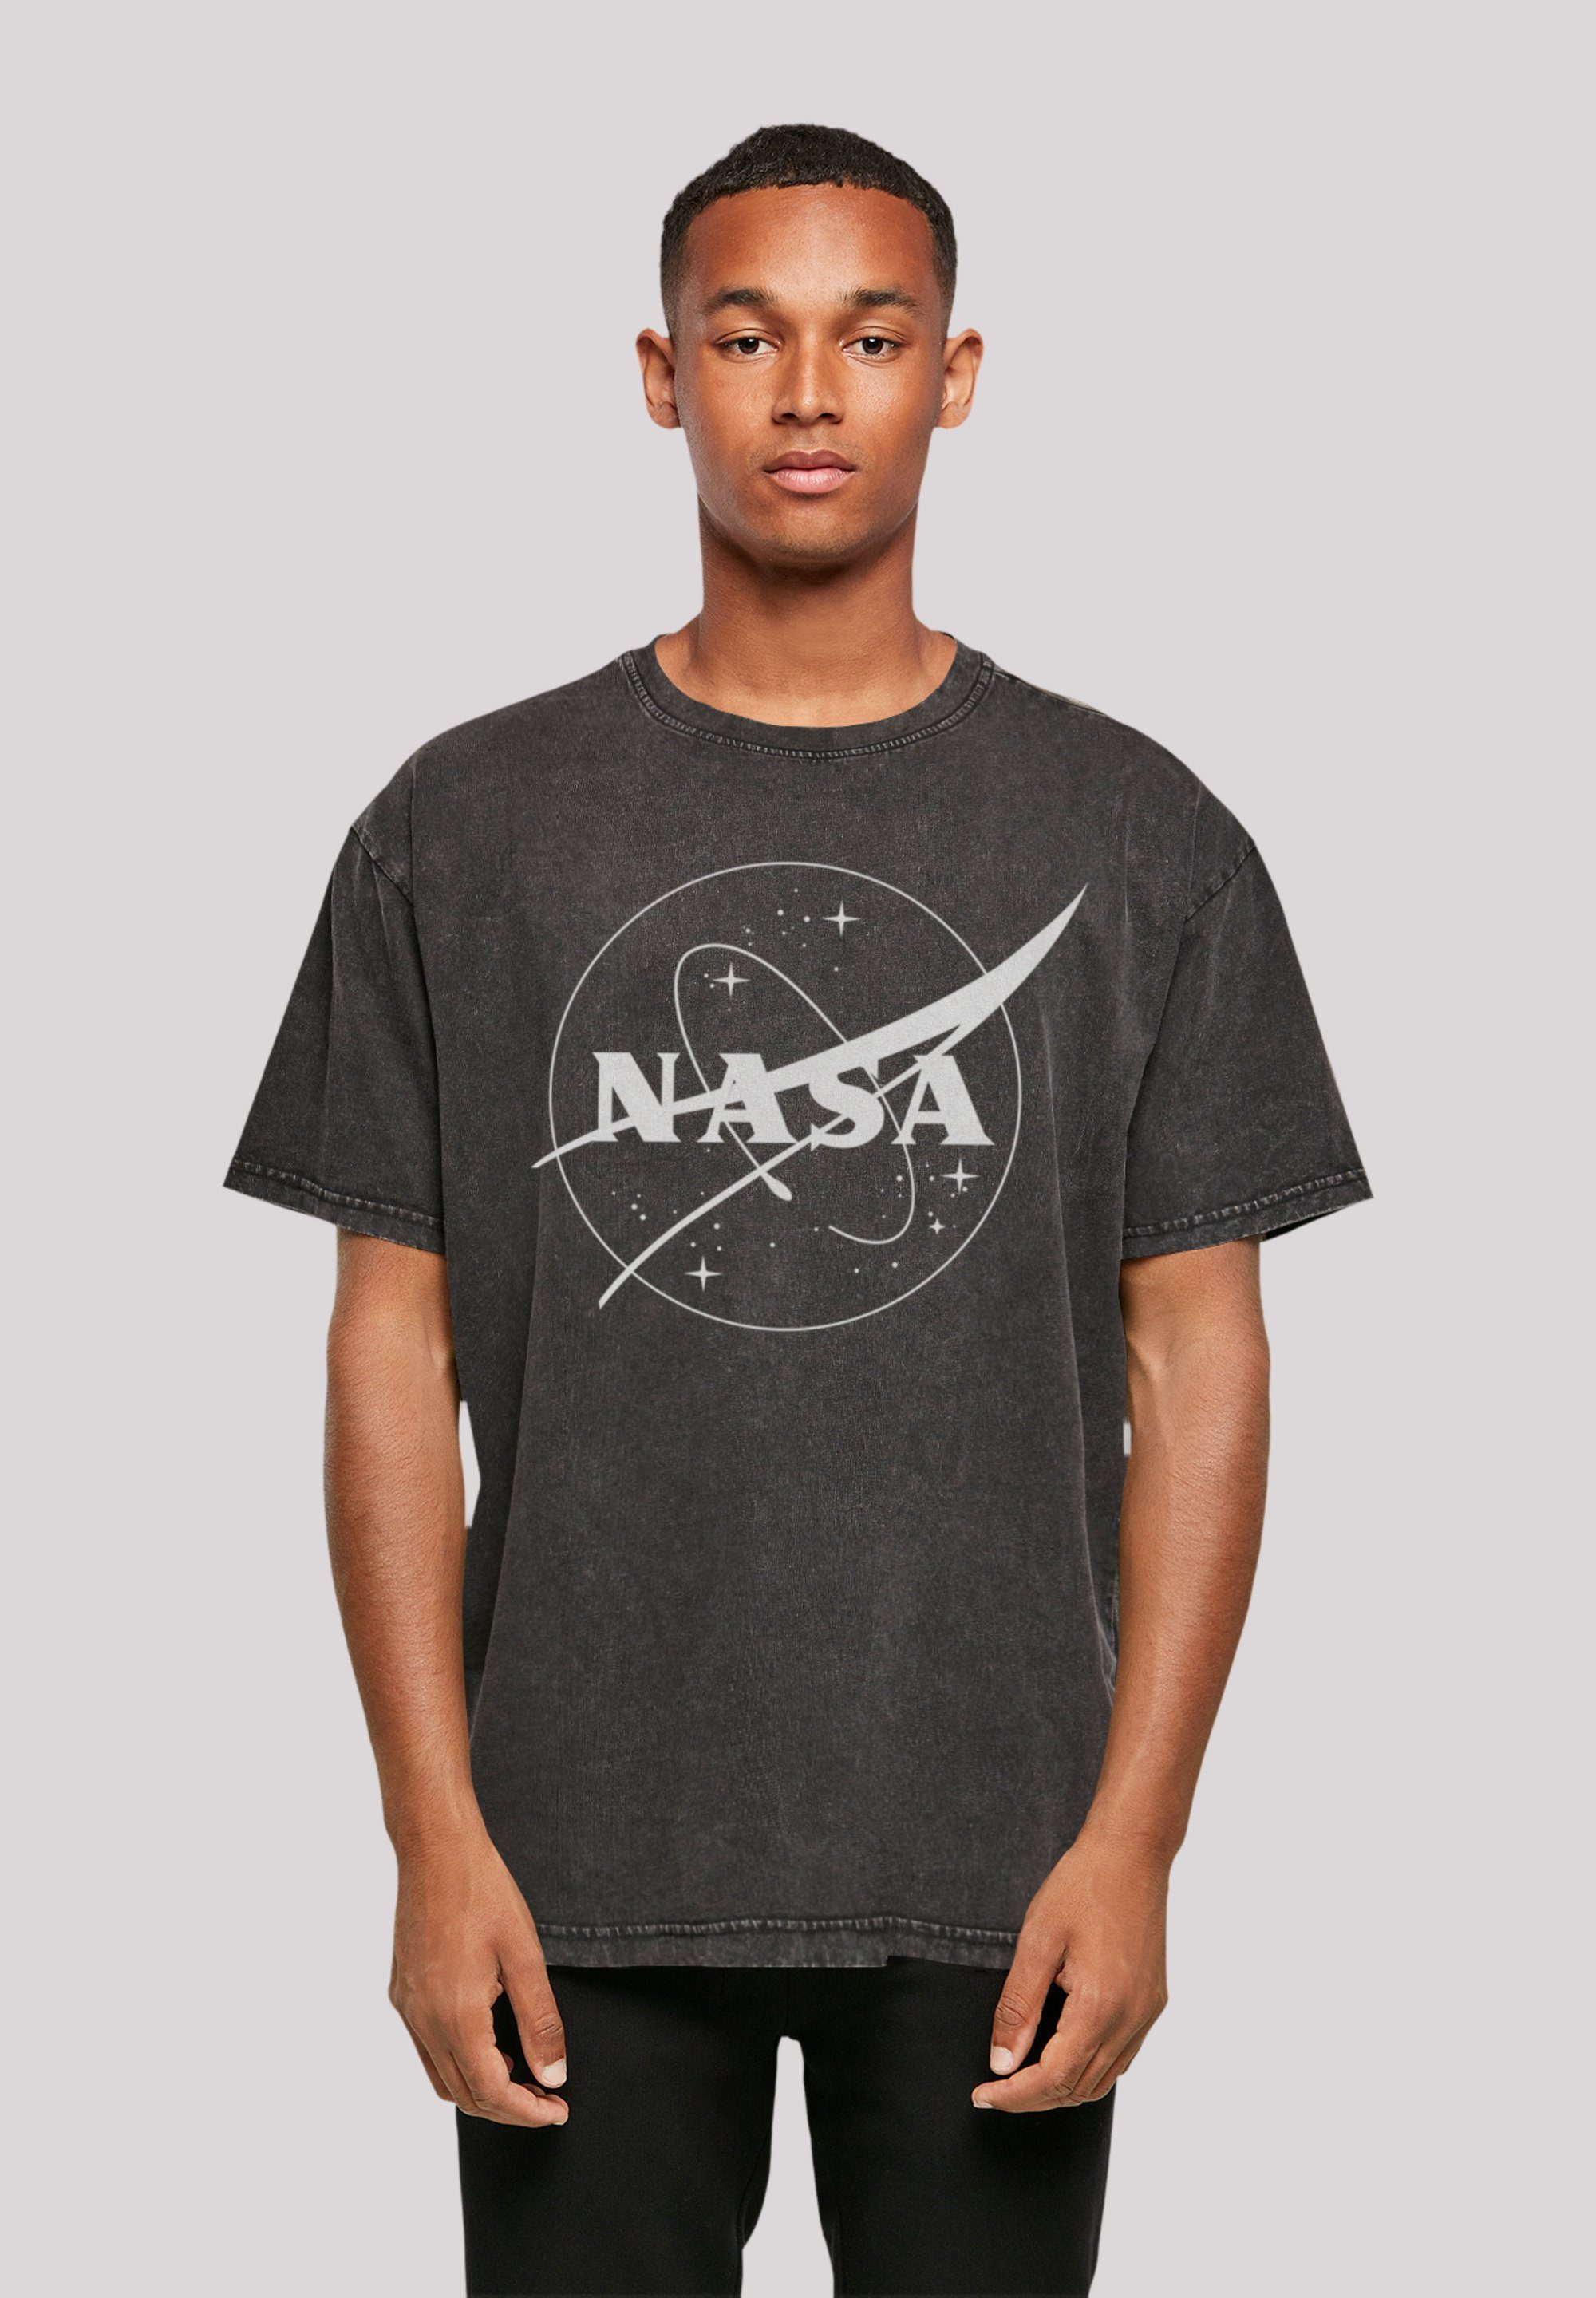 F4NT4STIC T-Shirt NASA Classic Print schwarz Insignia Logo